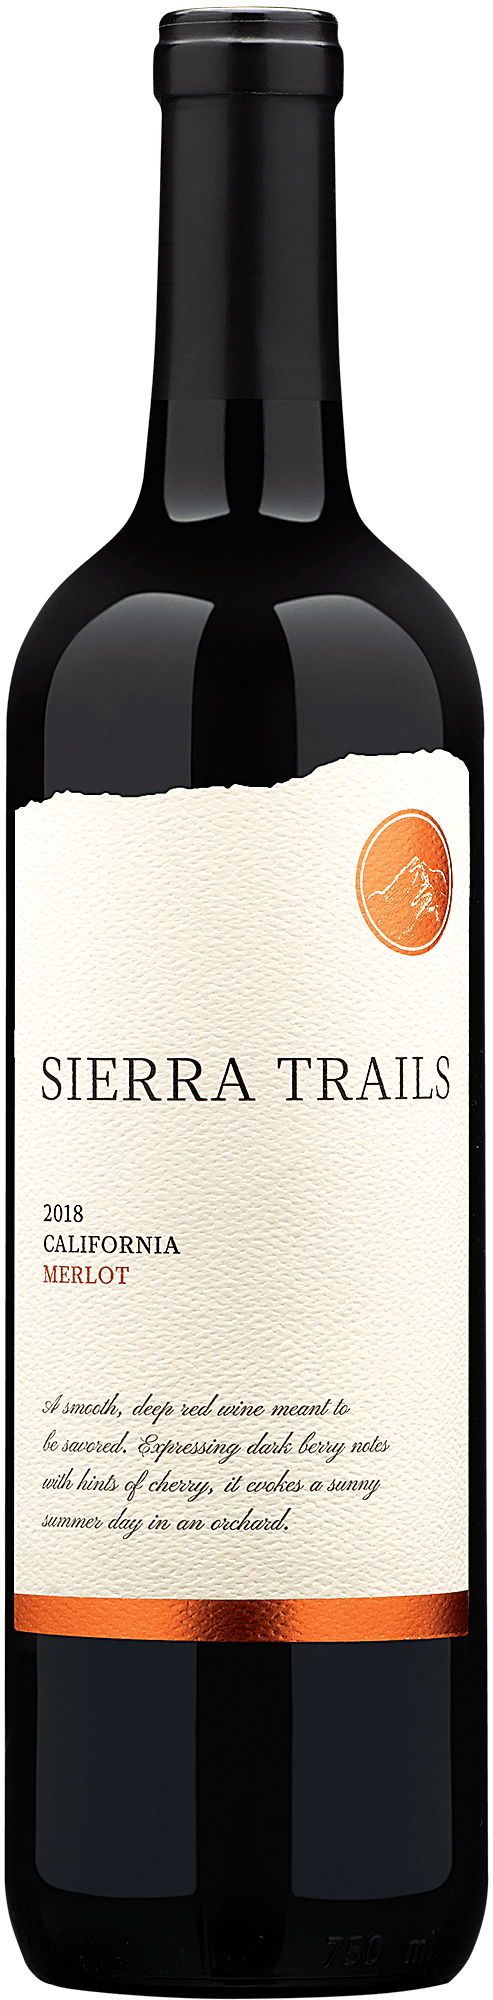 2018 Sierra Trails Merlot